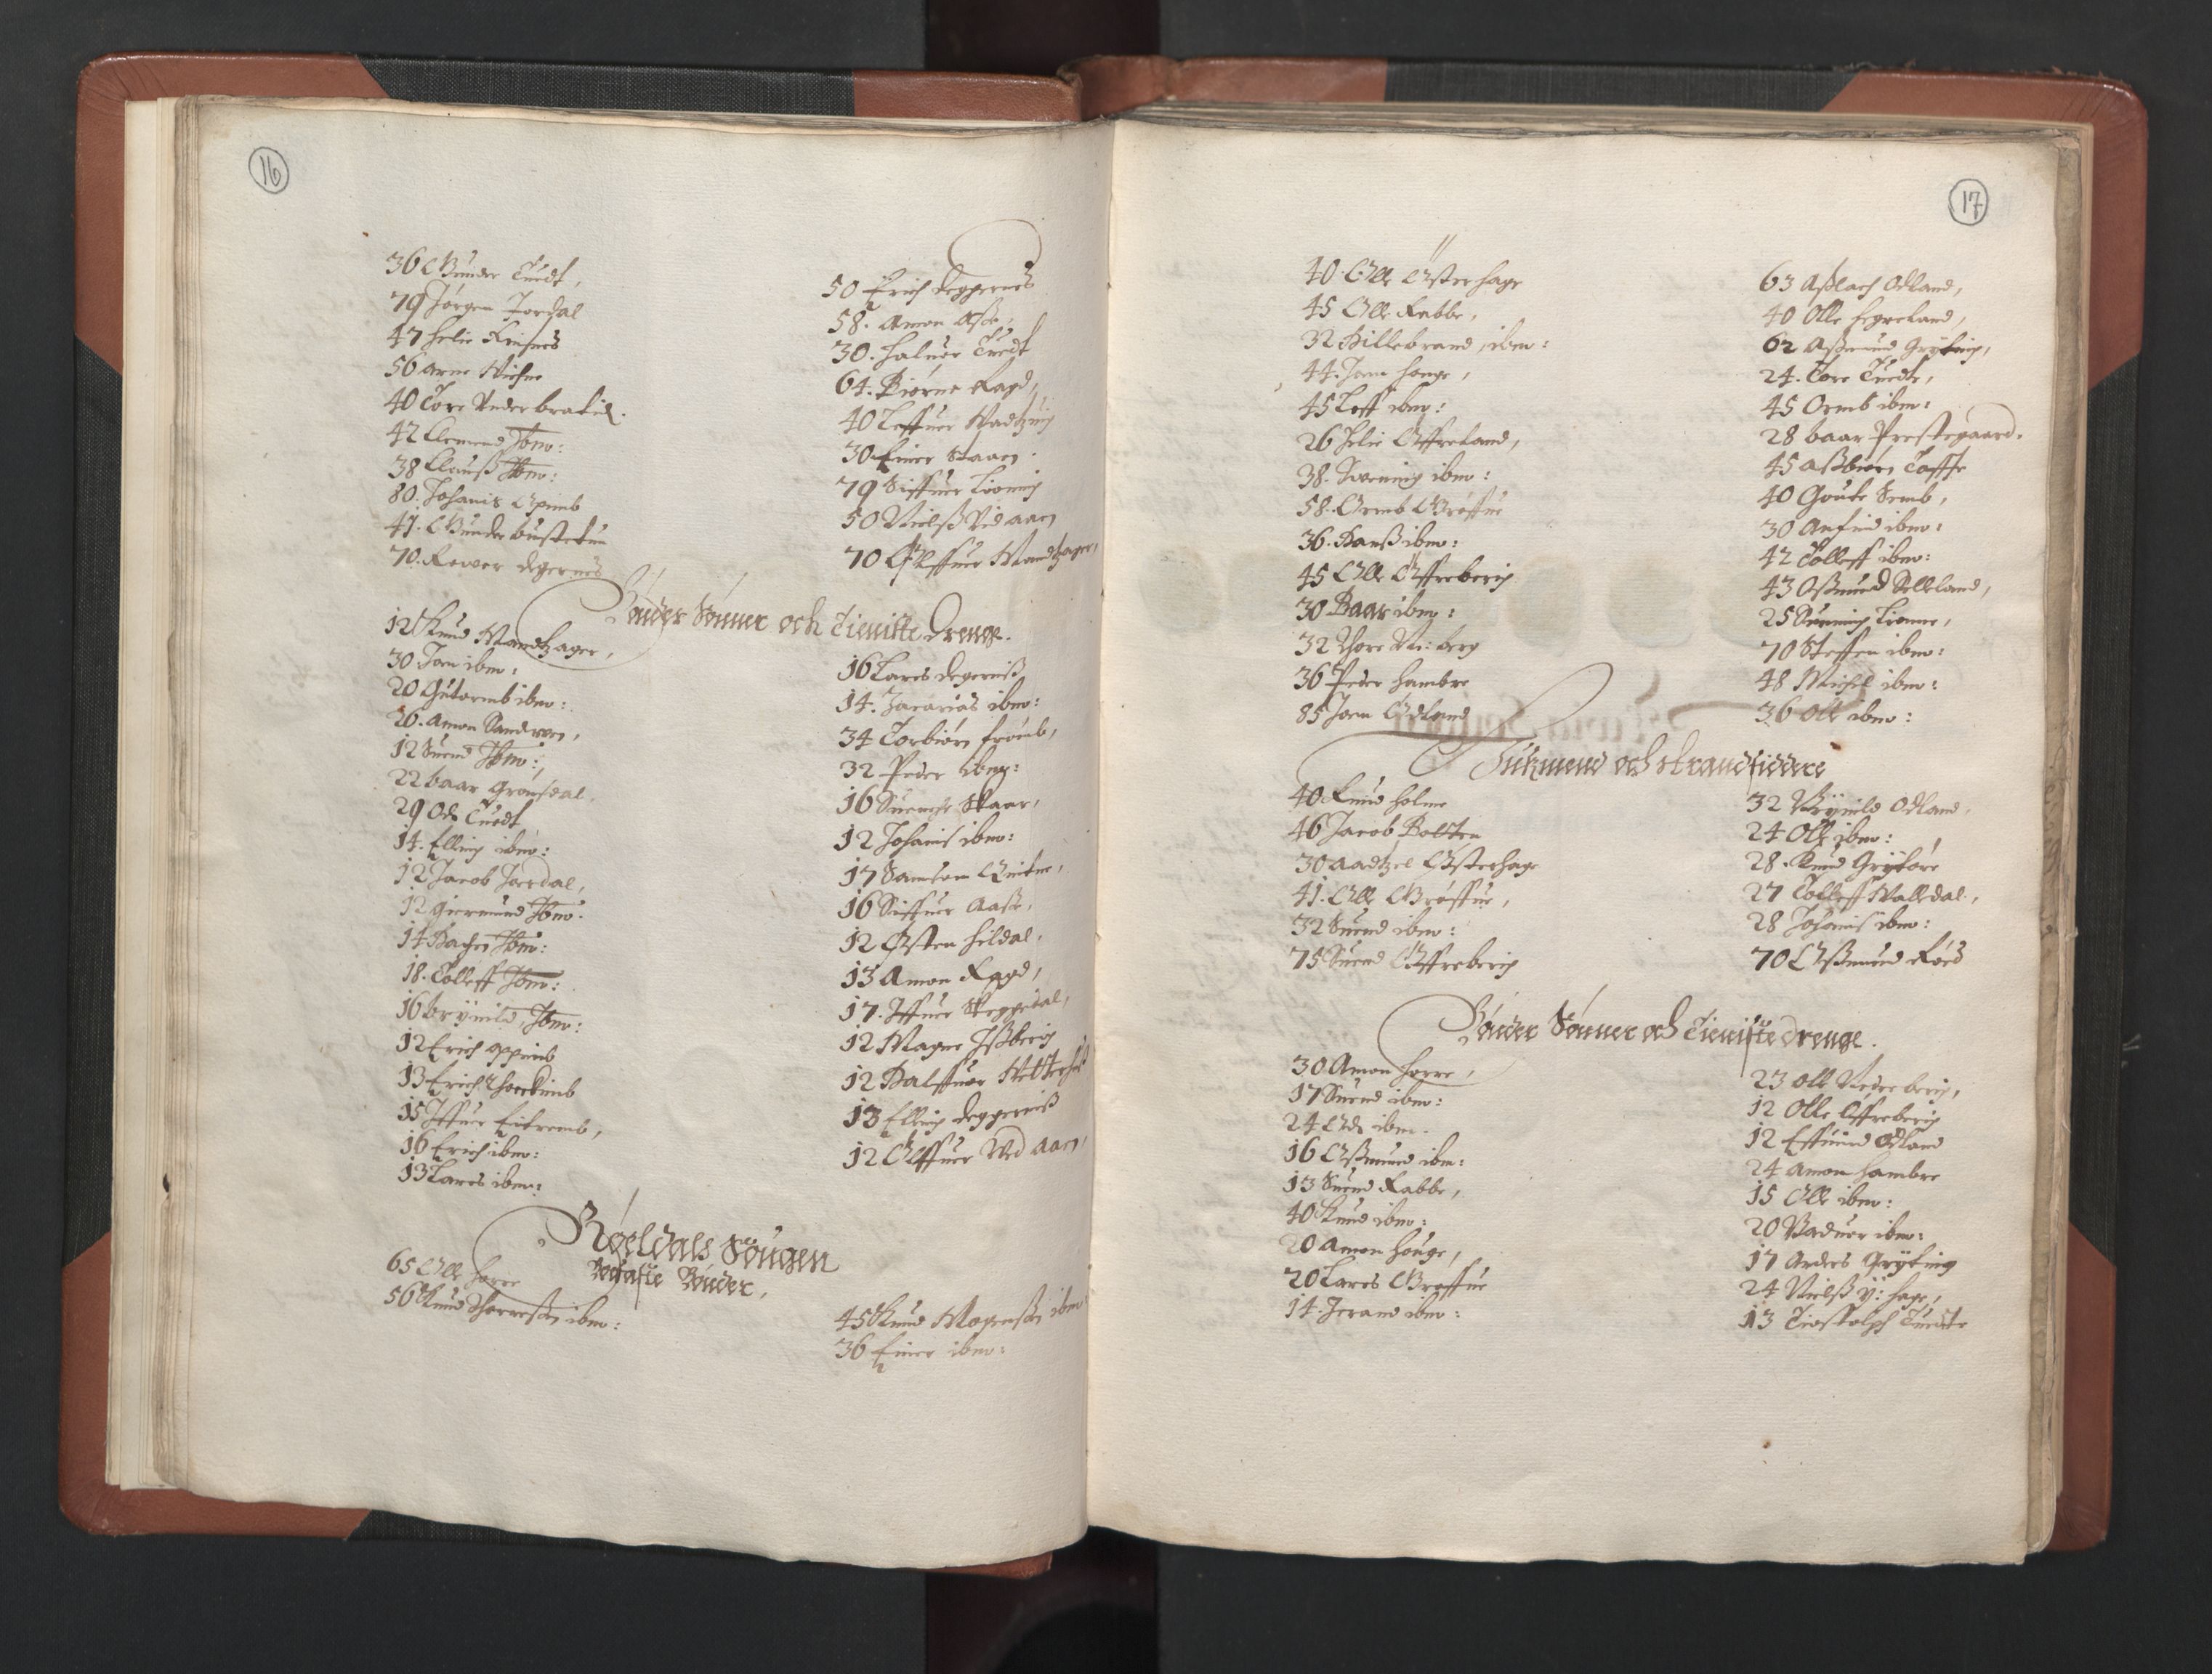 RA, Fogdenes og sorenskrivernes manntall 1664-1666, nr. 14: Hardanger len, Ytre Sogn fogderi og Indre Sogn fogderi, 1664-1665, s. 16-17